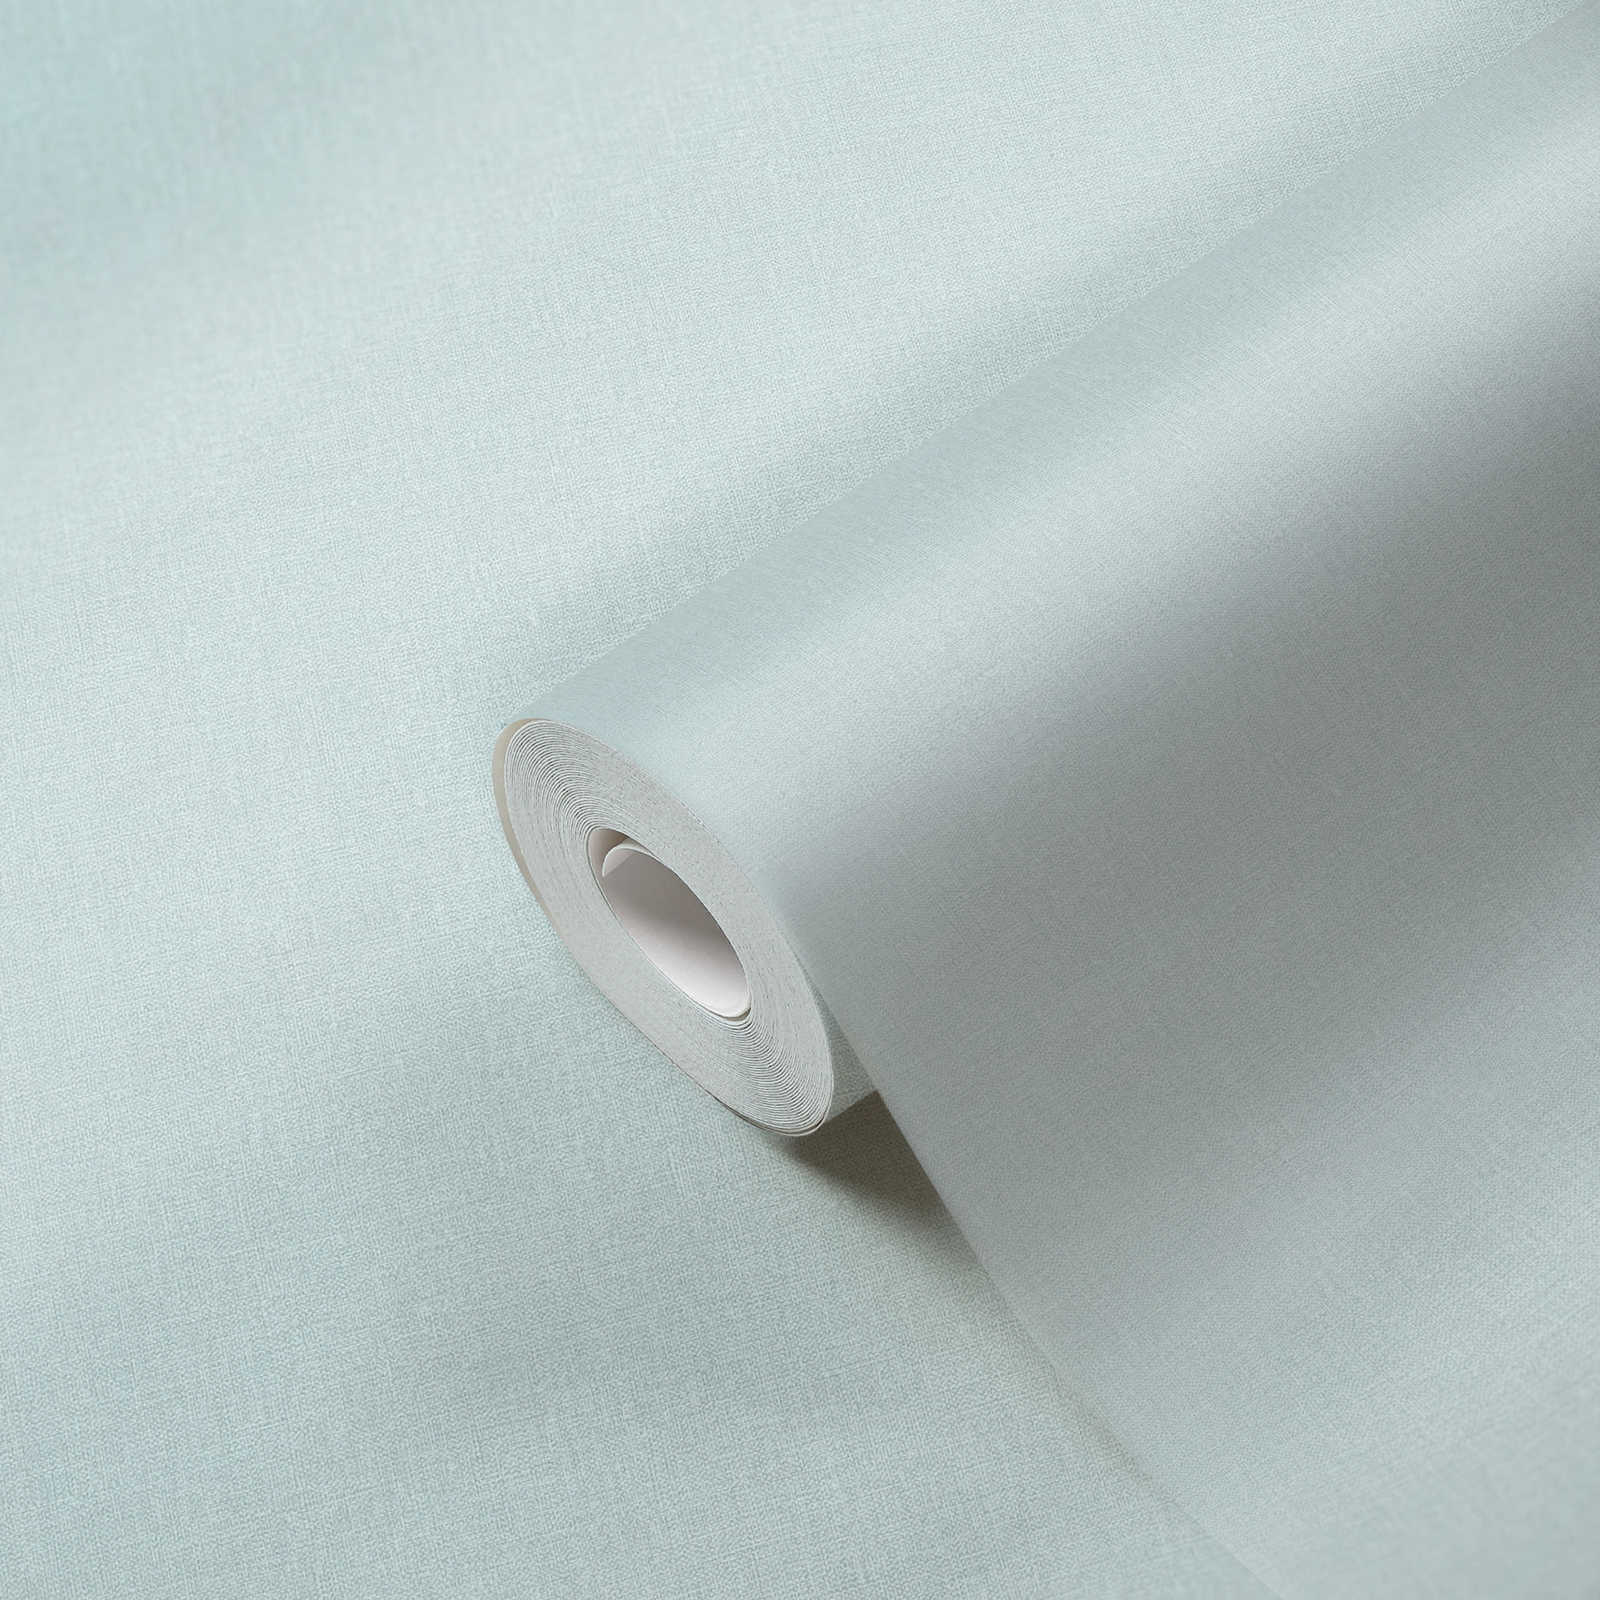             Papel pintado no tejido liso con ligero brillo - azul claro
        